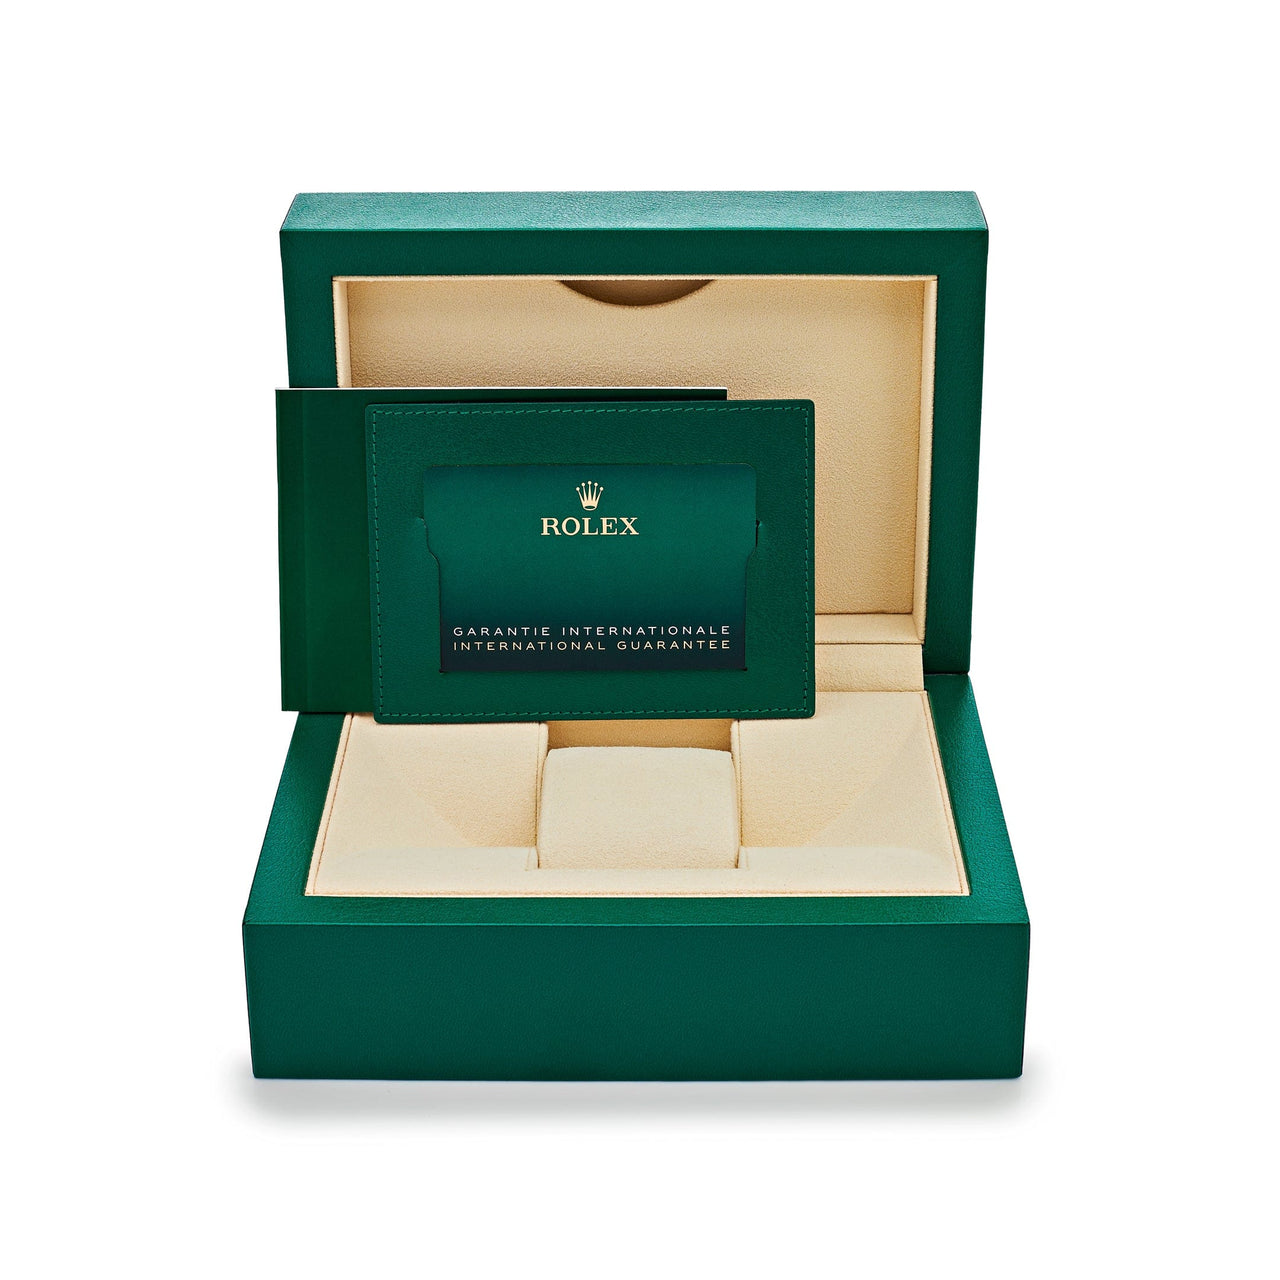 Luxury Watch Rolex Day-Date 40 White Gold Black Diamond Dial & Bezel 228349RBR Wrist Aficionado